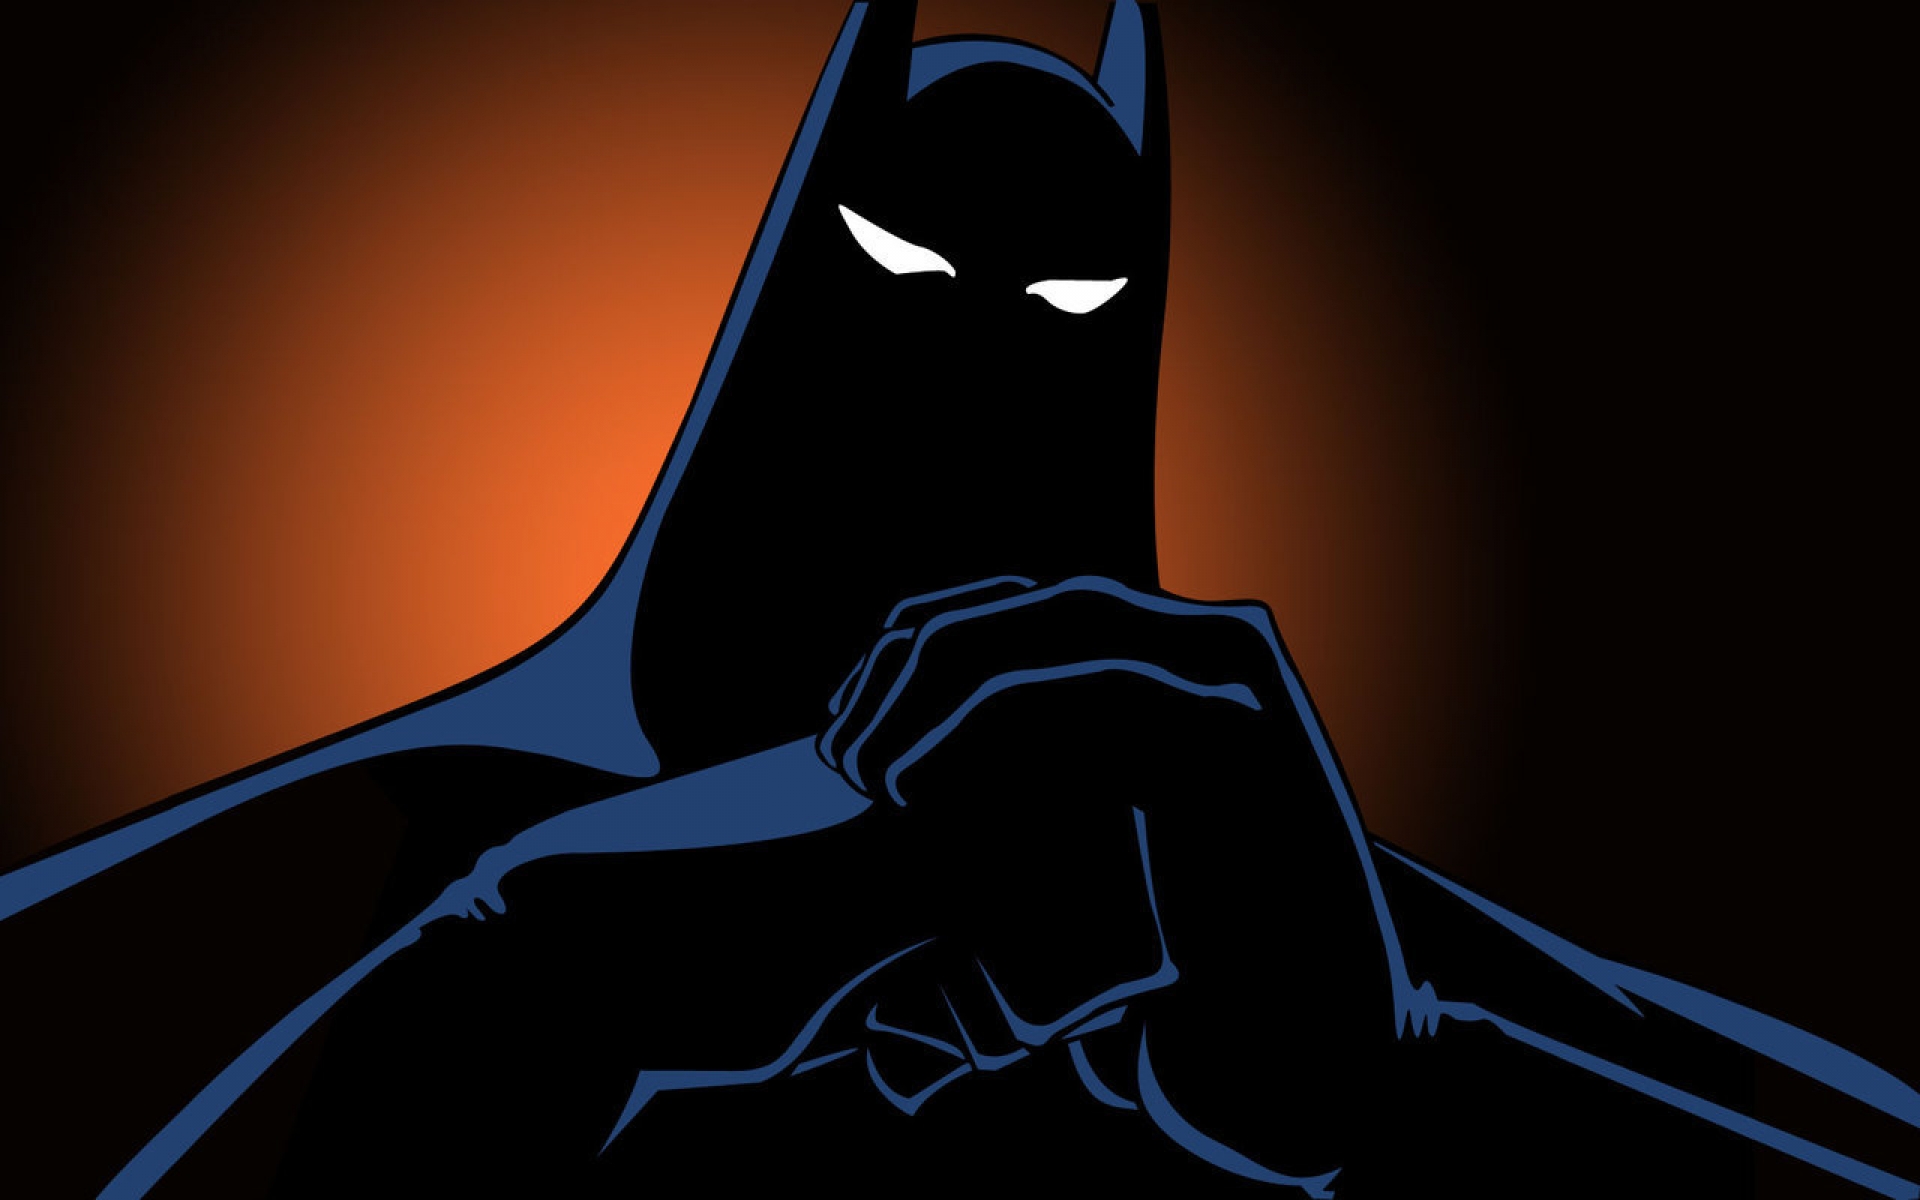 Batman: The Animated Series Backgrounds, Compatible - PC, Mobile, Gadgets| 1920x1200 px